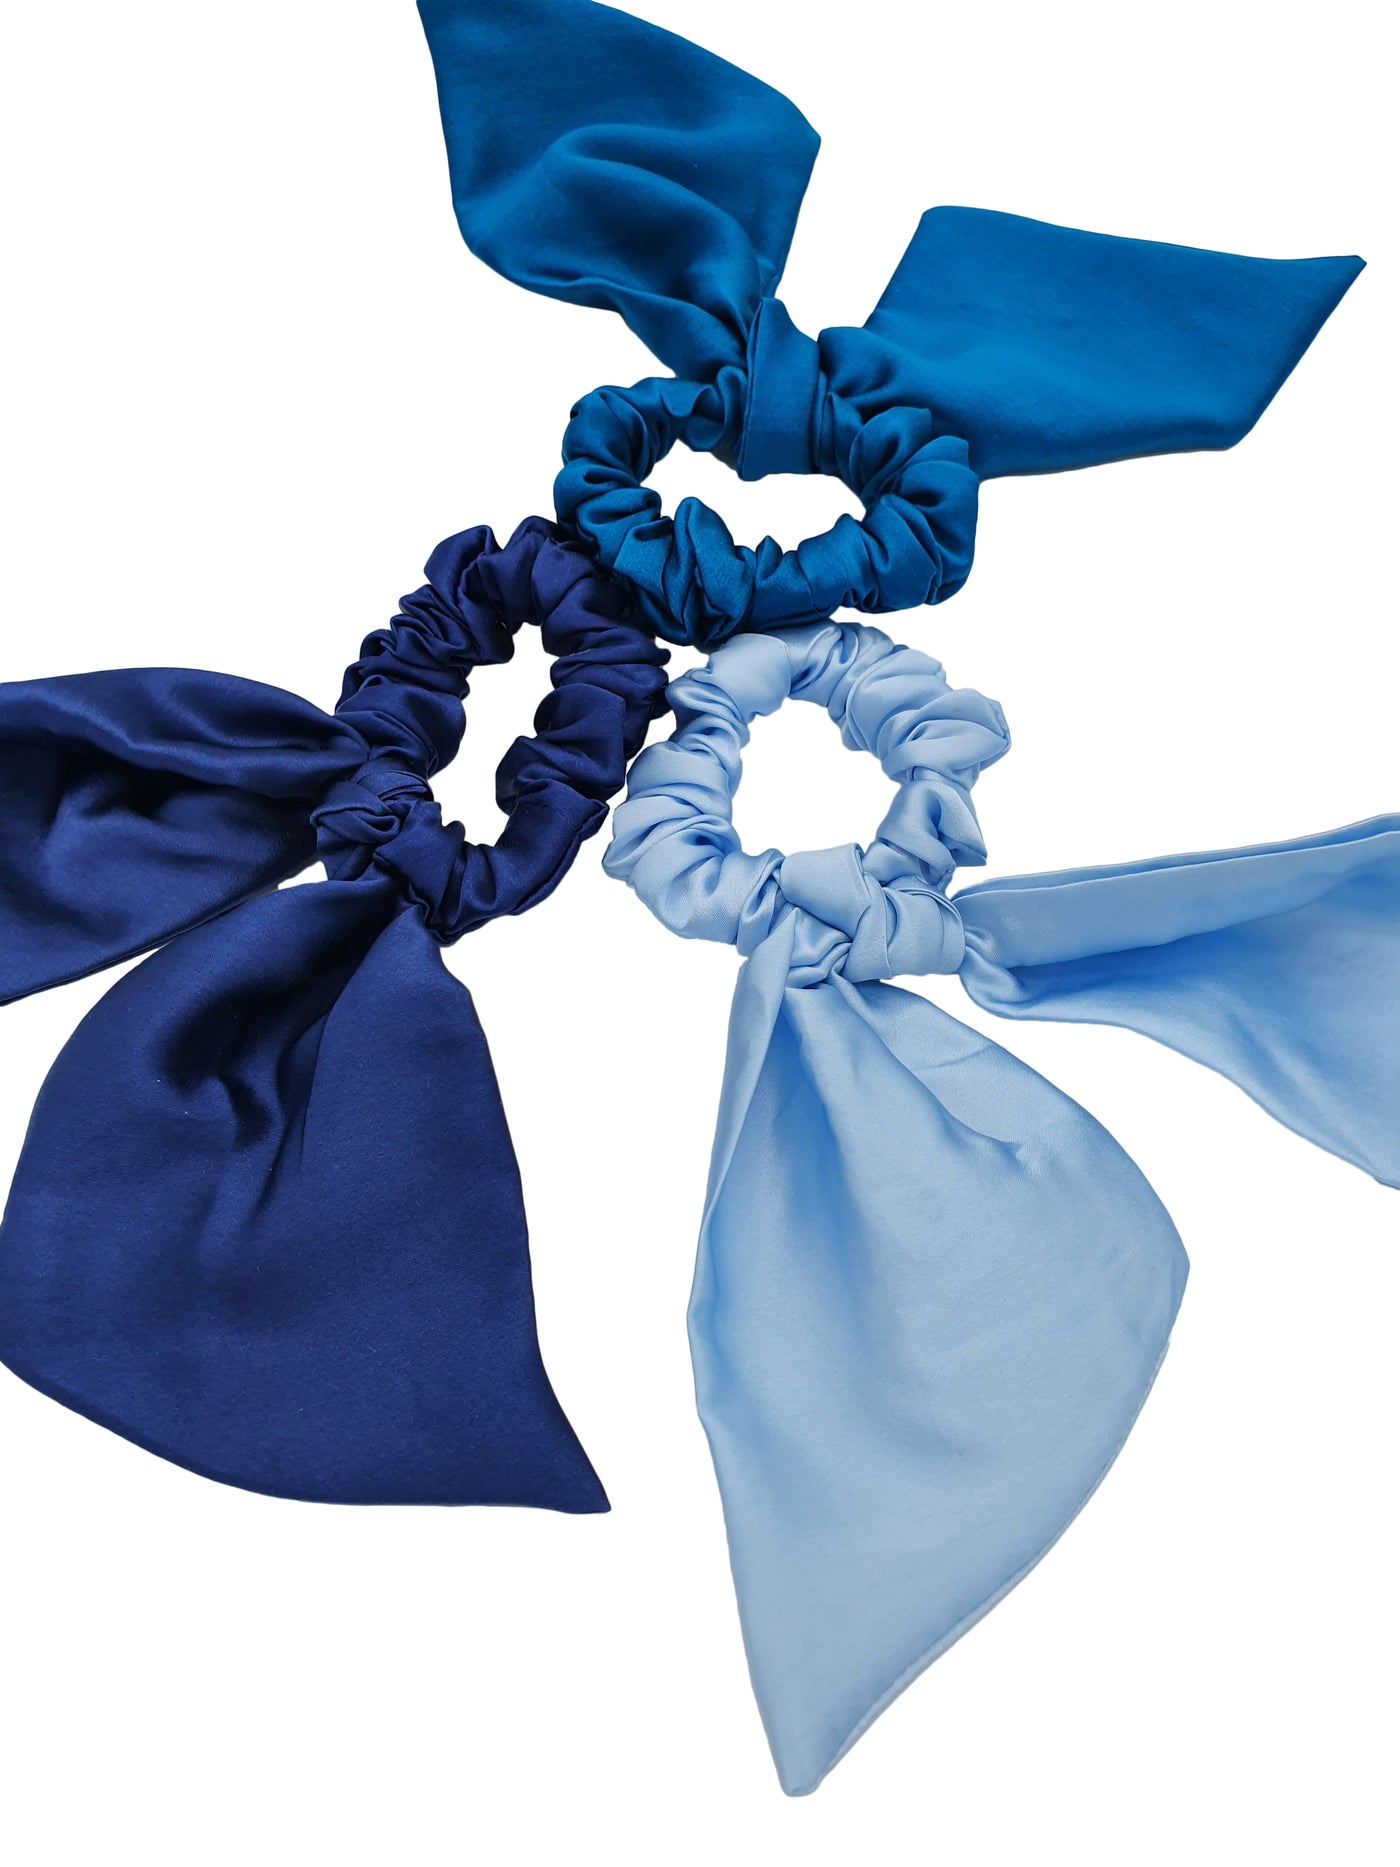 Silk Bowknot Scrunchies blue navy 